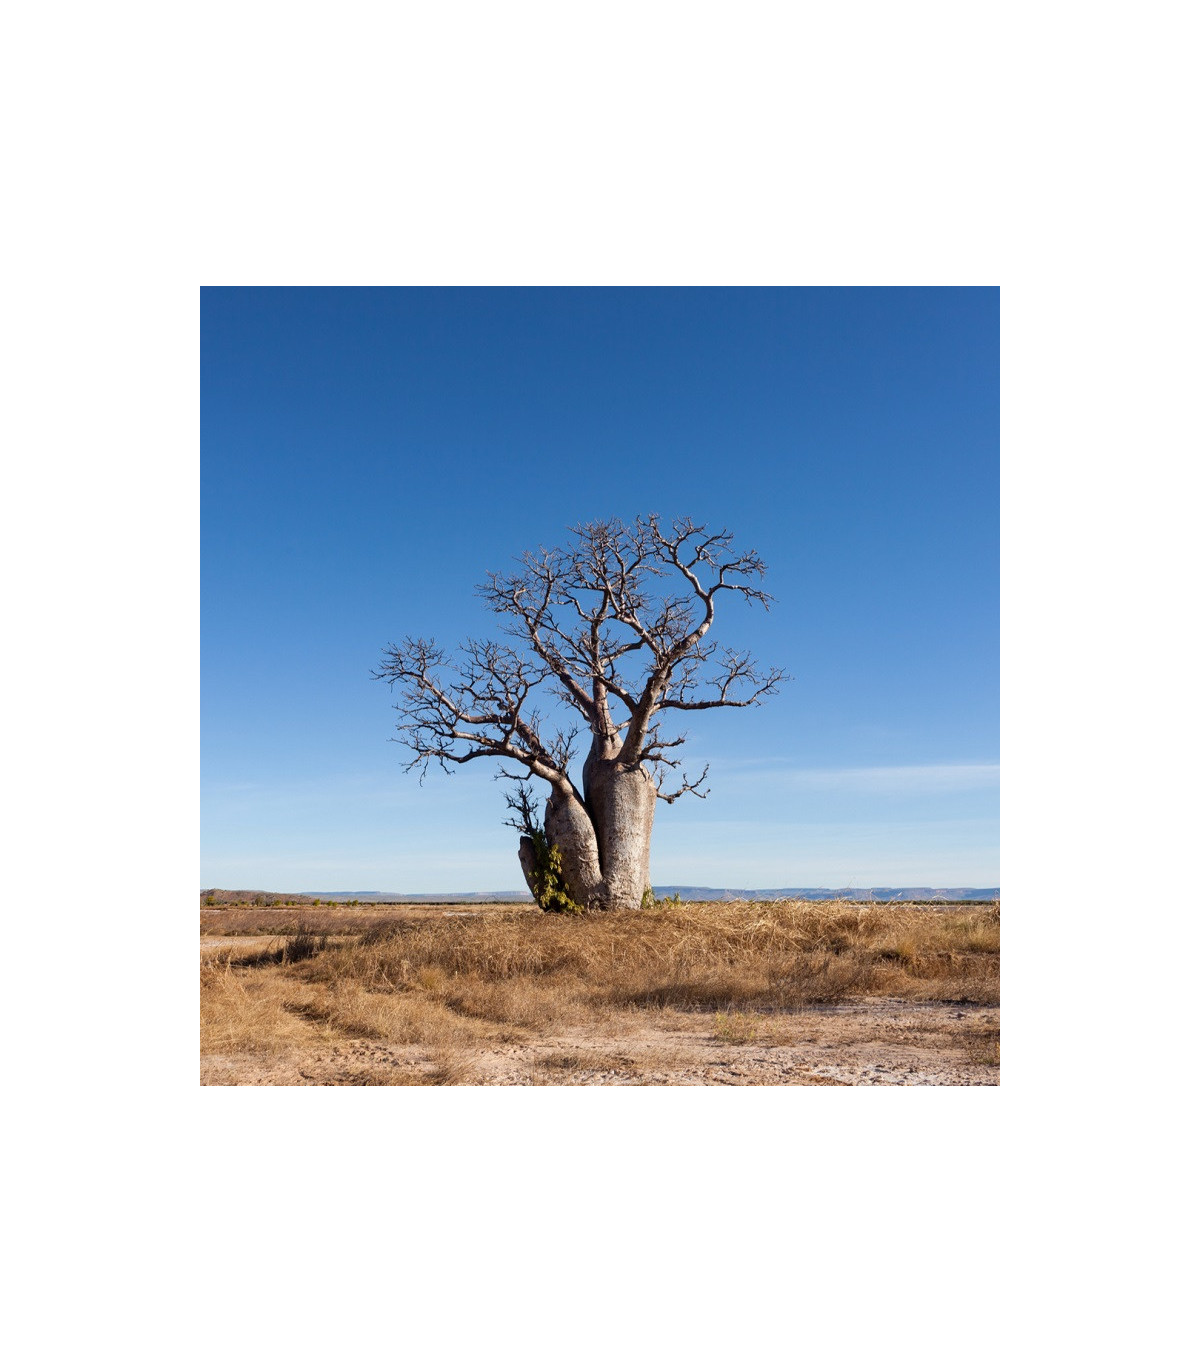 Austrálsky baobab – Adansonia gregorii – semená baobabu